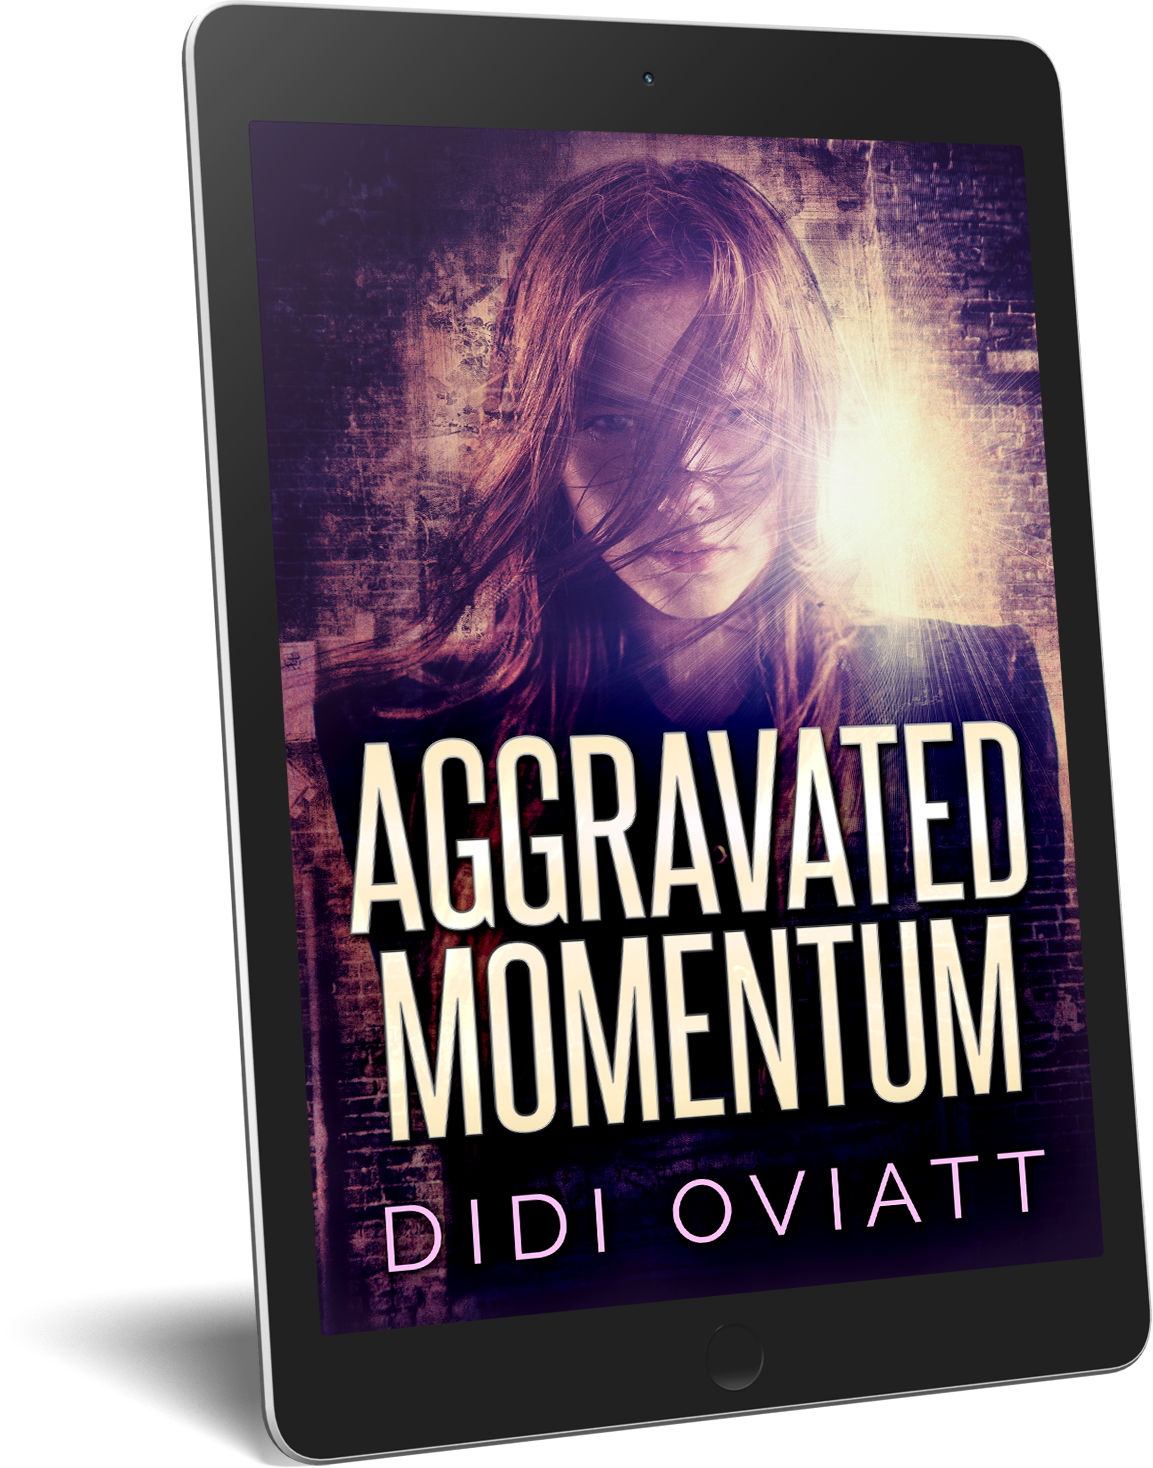 FREE: Aggravated Momentum by Didi Oviatt